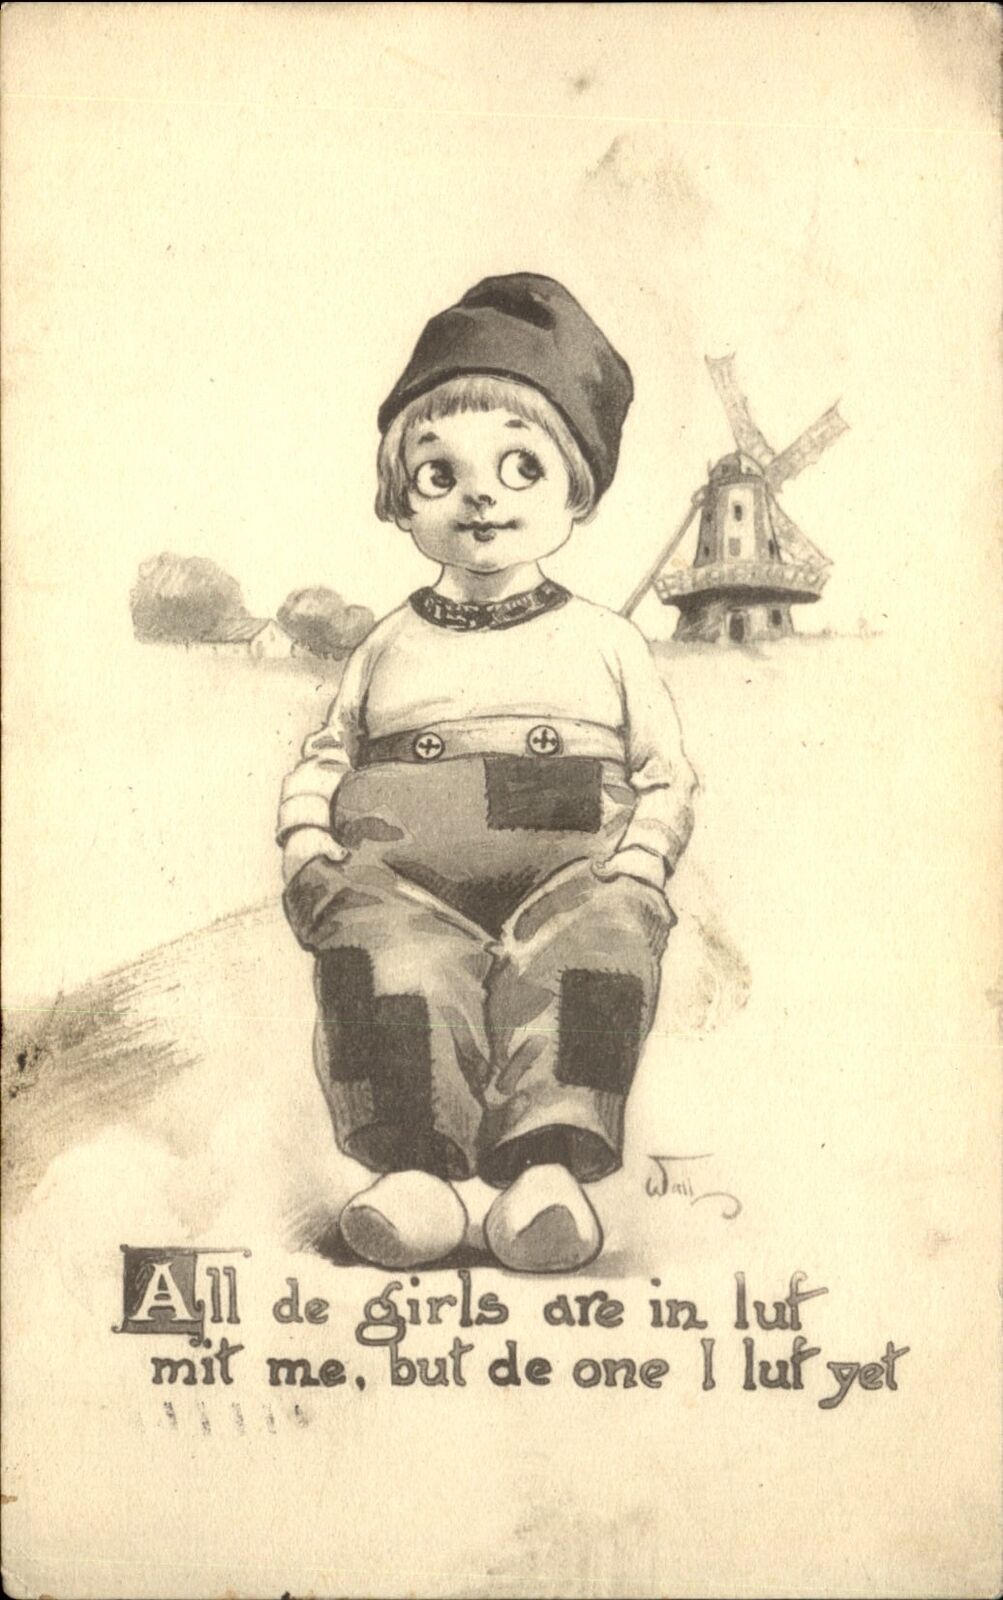 Dutch boy windmill wooden shoes artist B Wall comic~ 1911 RICHARD ASHTON ~ PA